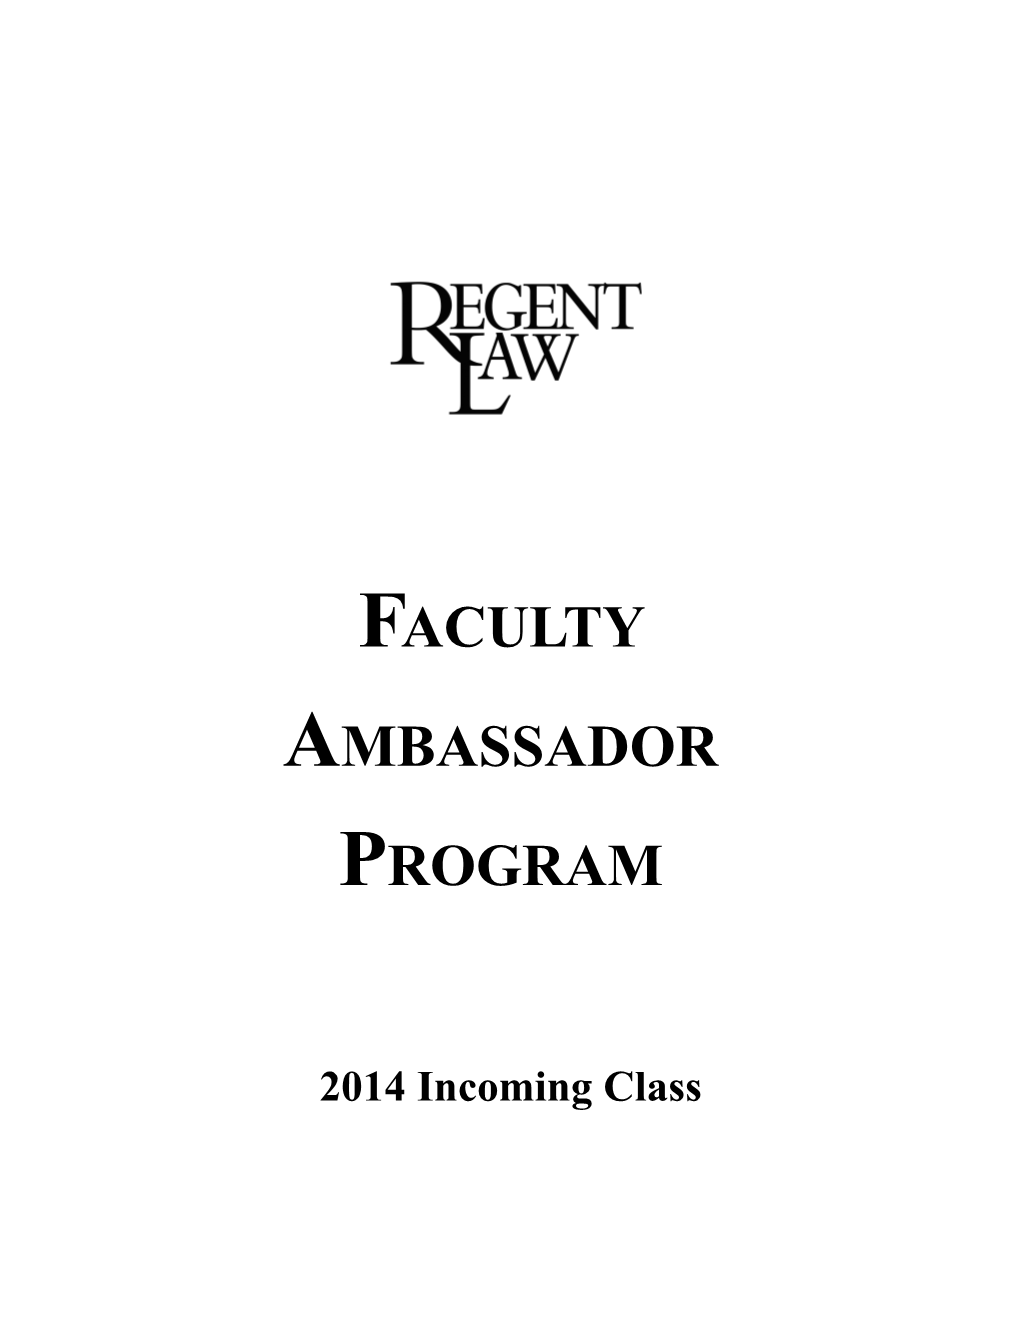 How the Ambassador Program Works